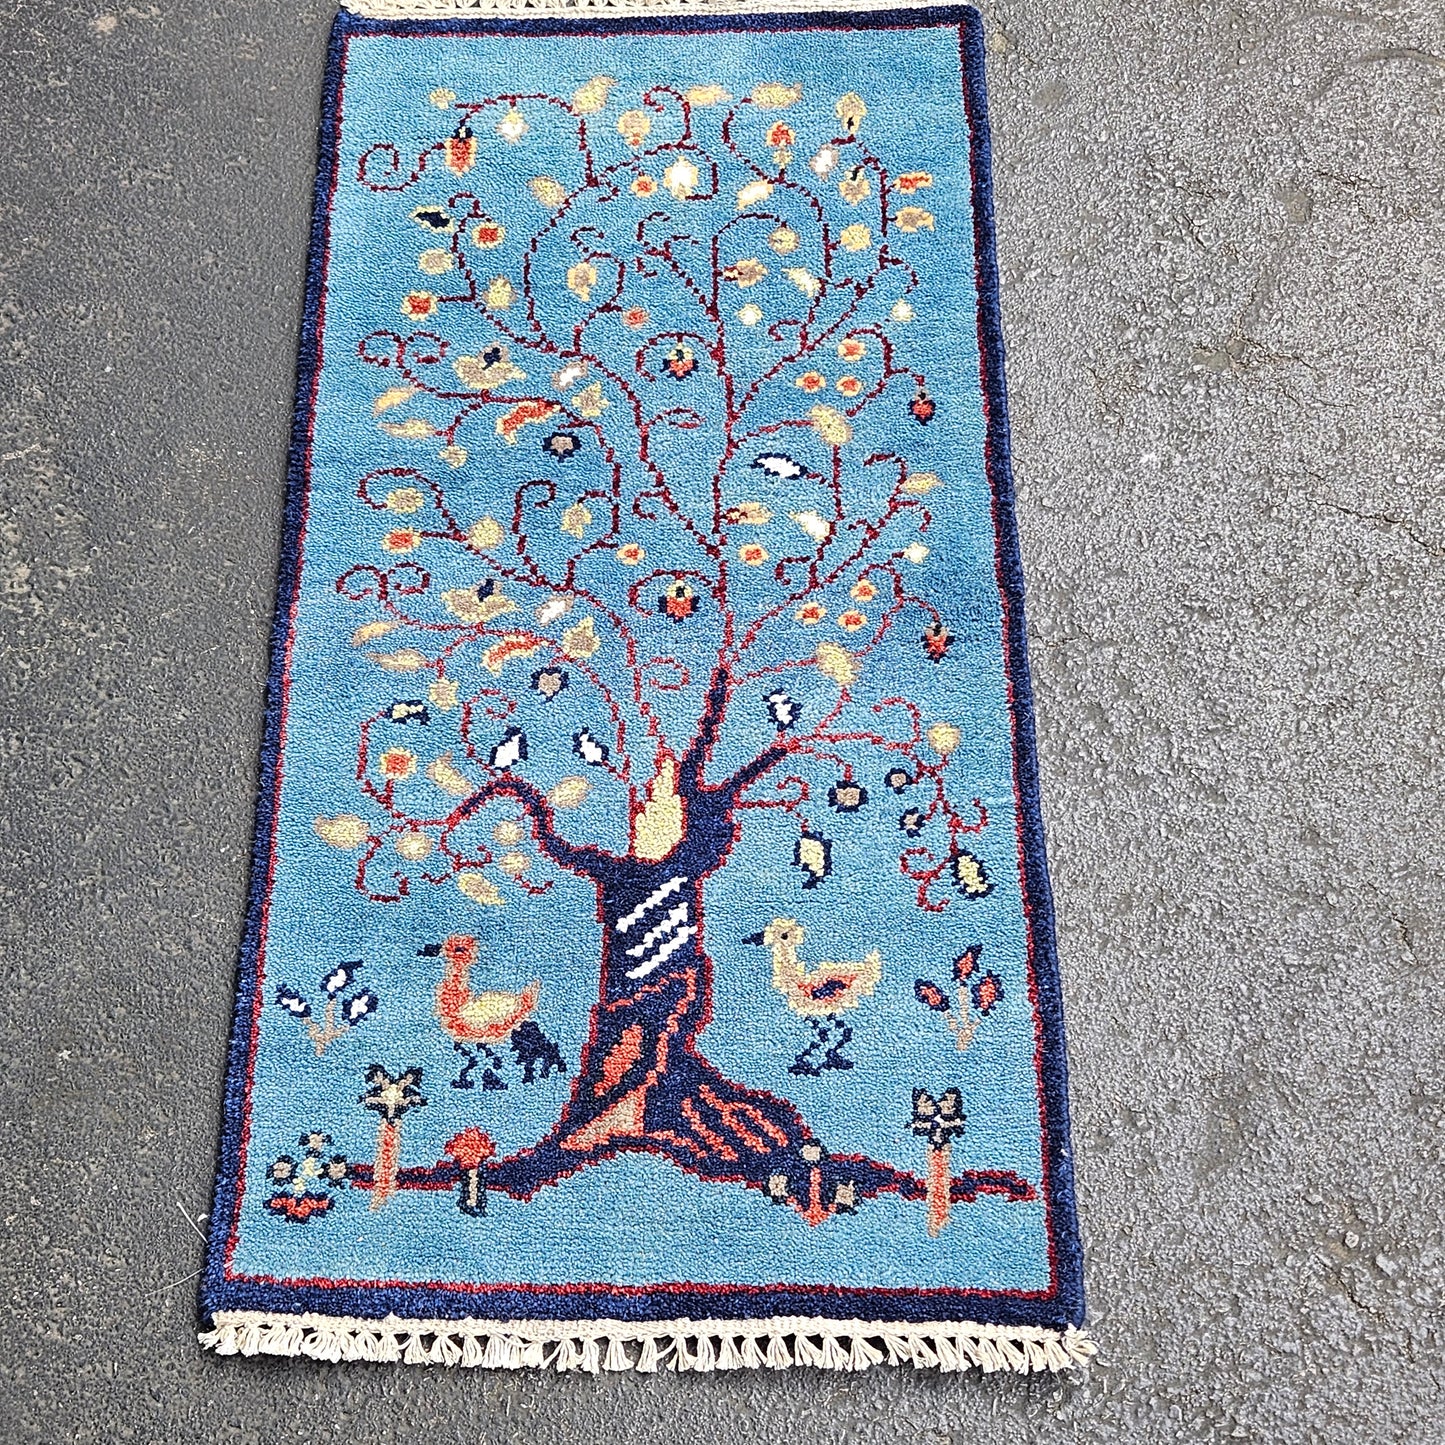 Three & Animal Themed Turkish Hand Knotted 100% Wool Rug / Carpet - 2' x 4' 3"